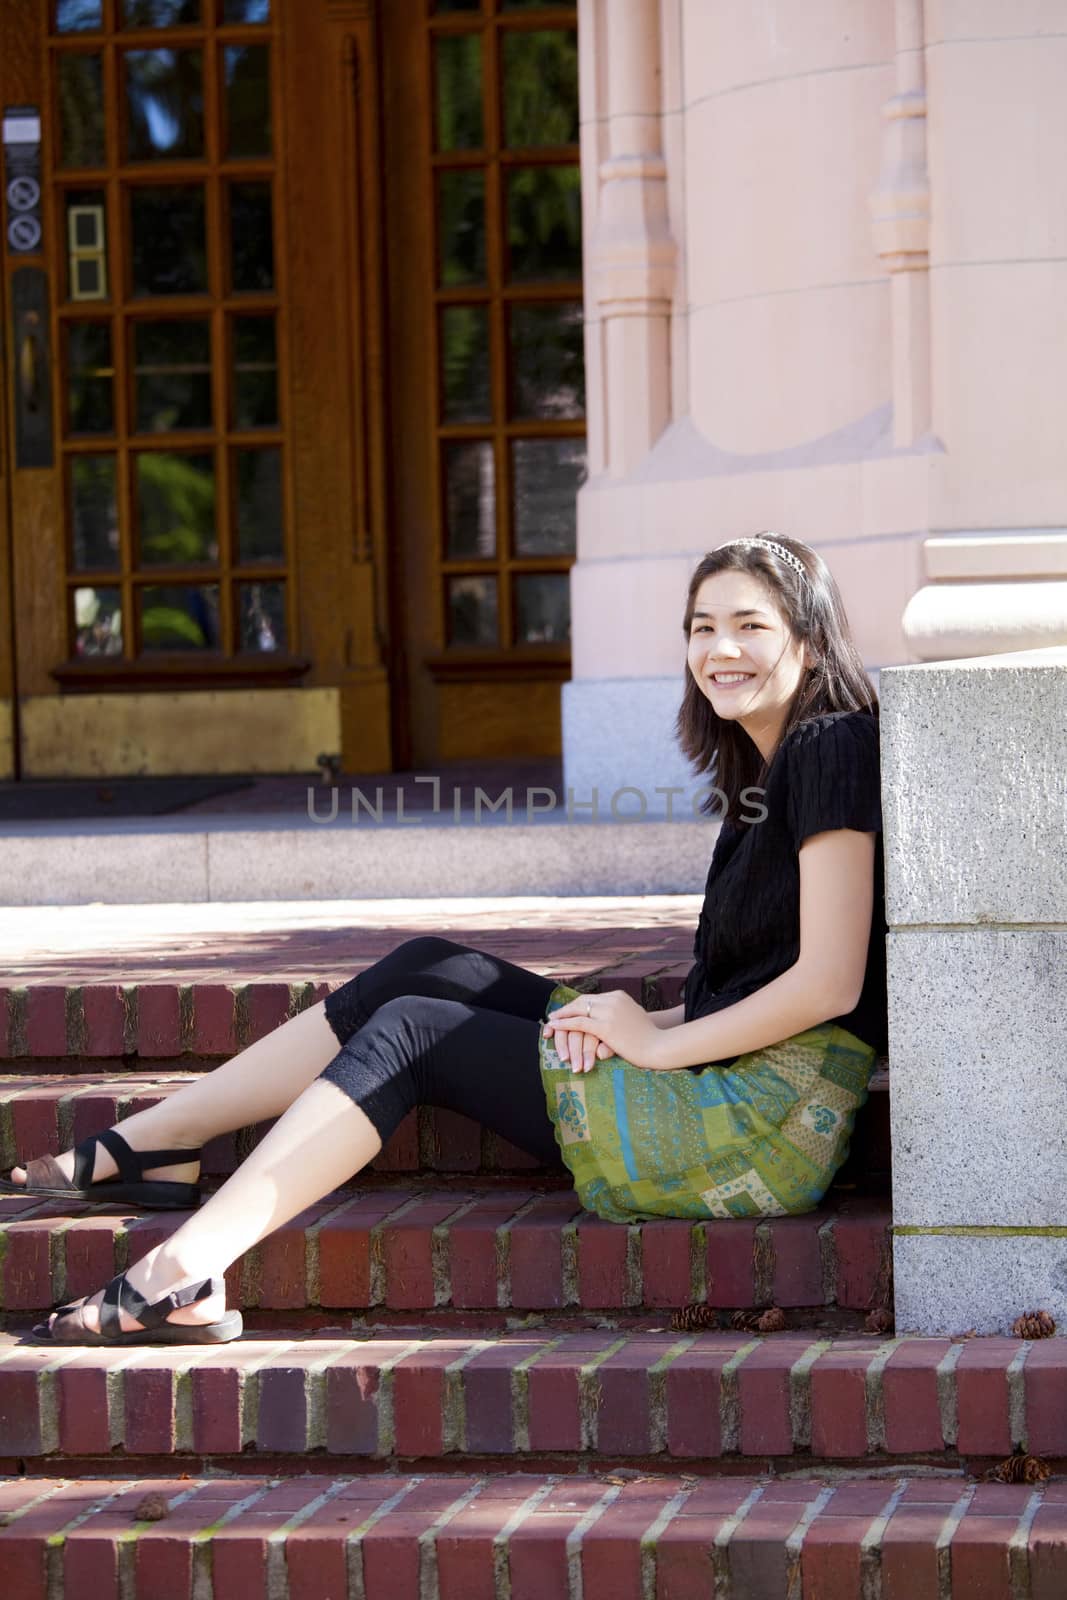 Young teen girl enjoying sunshine, sitting on brick steps outdoo by jarenwicklund